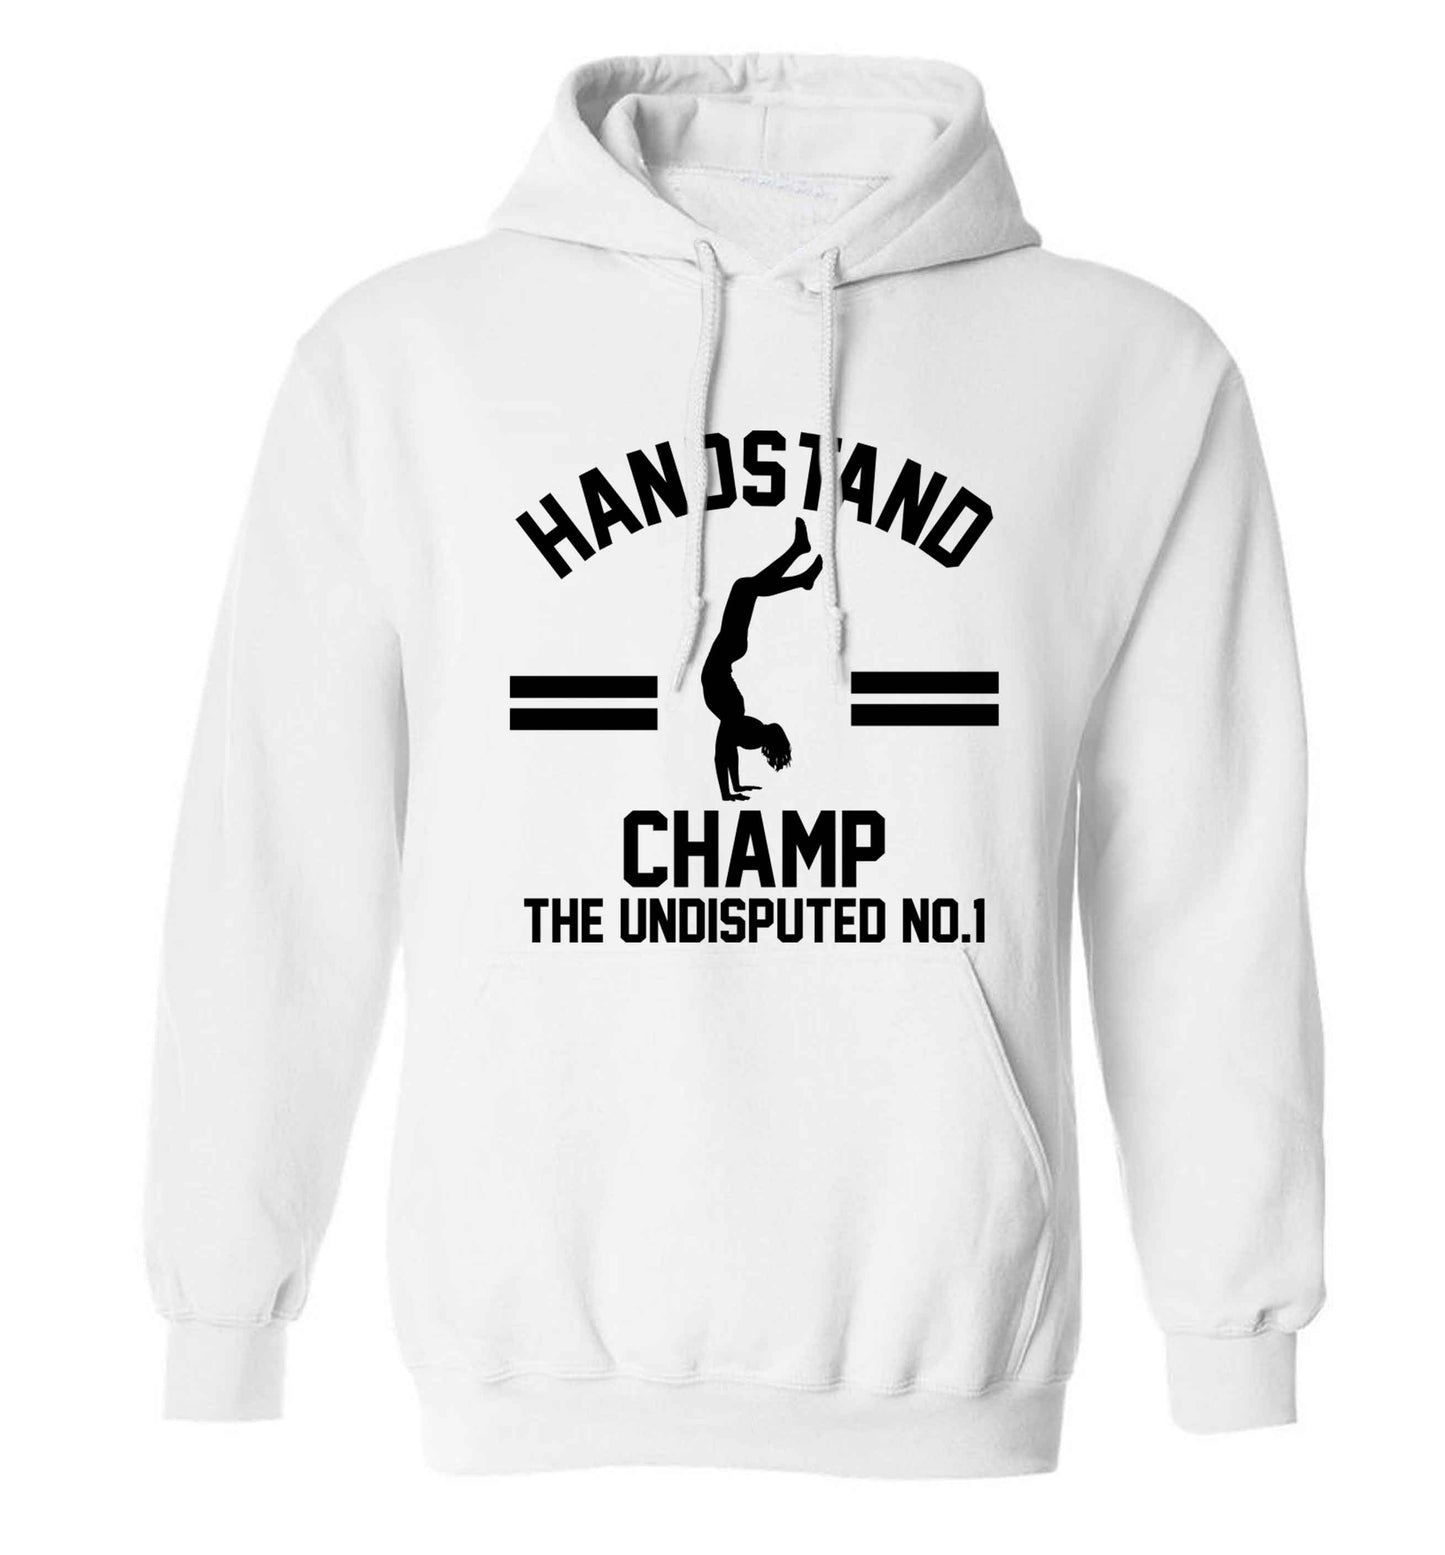 Undisputed handstand championship no.1  adults unisex white hoodie 2XL